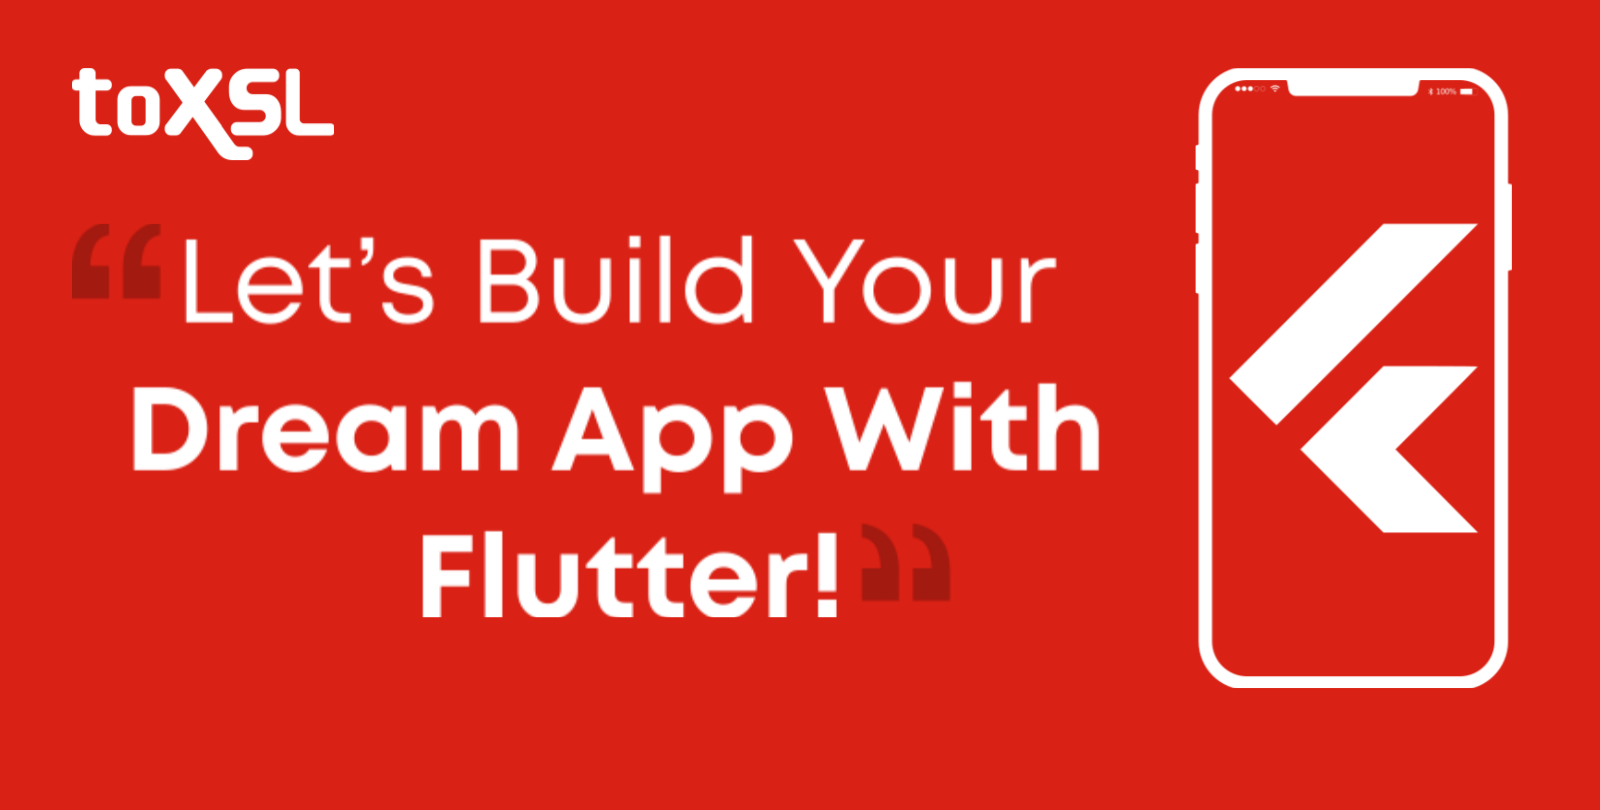 Let’s Build Your Dream App with Flutter!